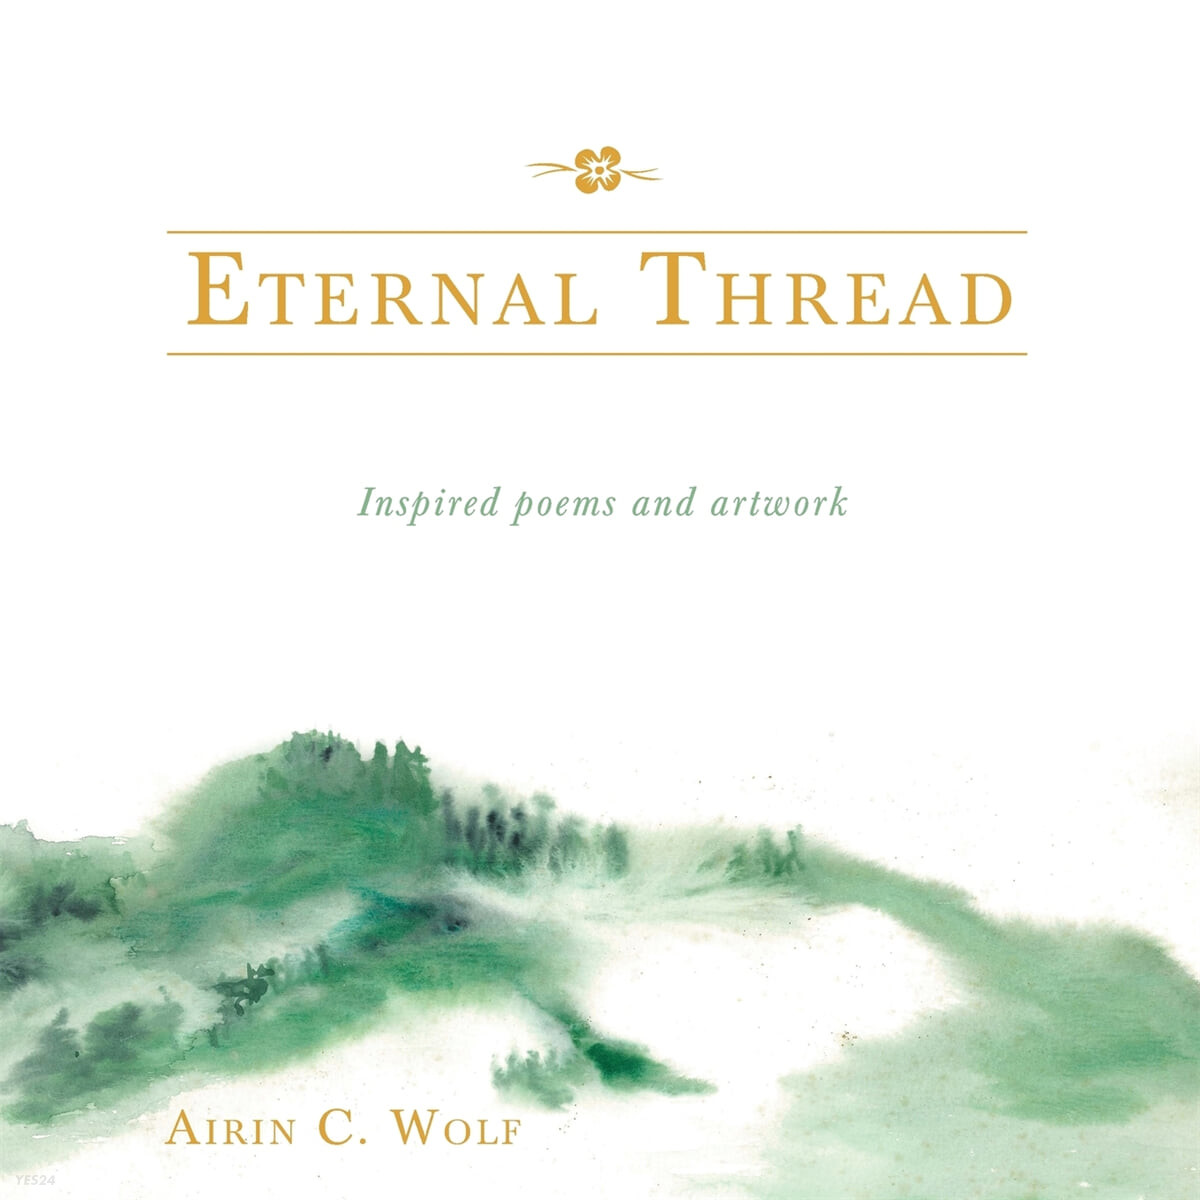 Eternal Thread (Inspired poems and artwork)